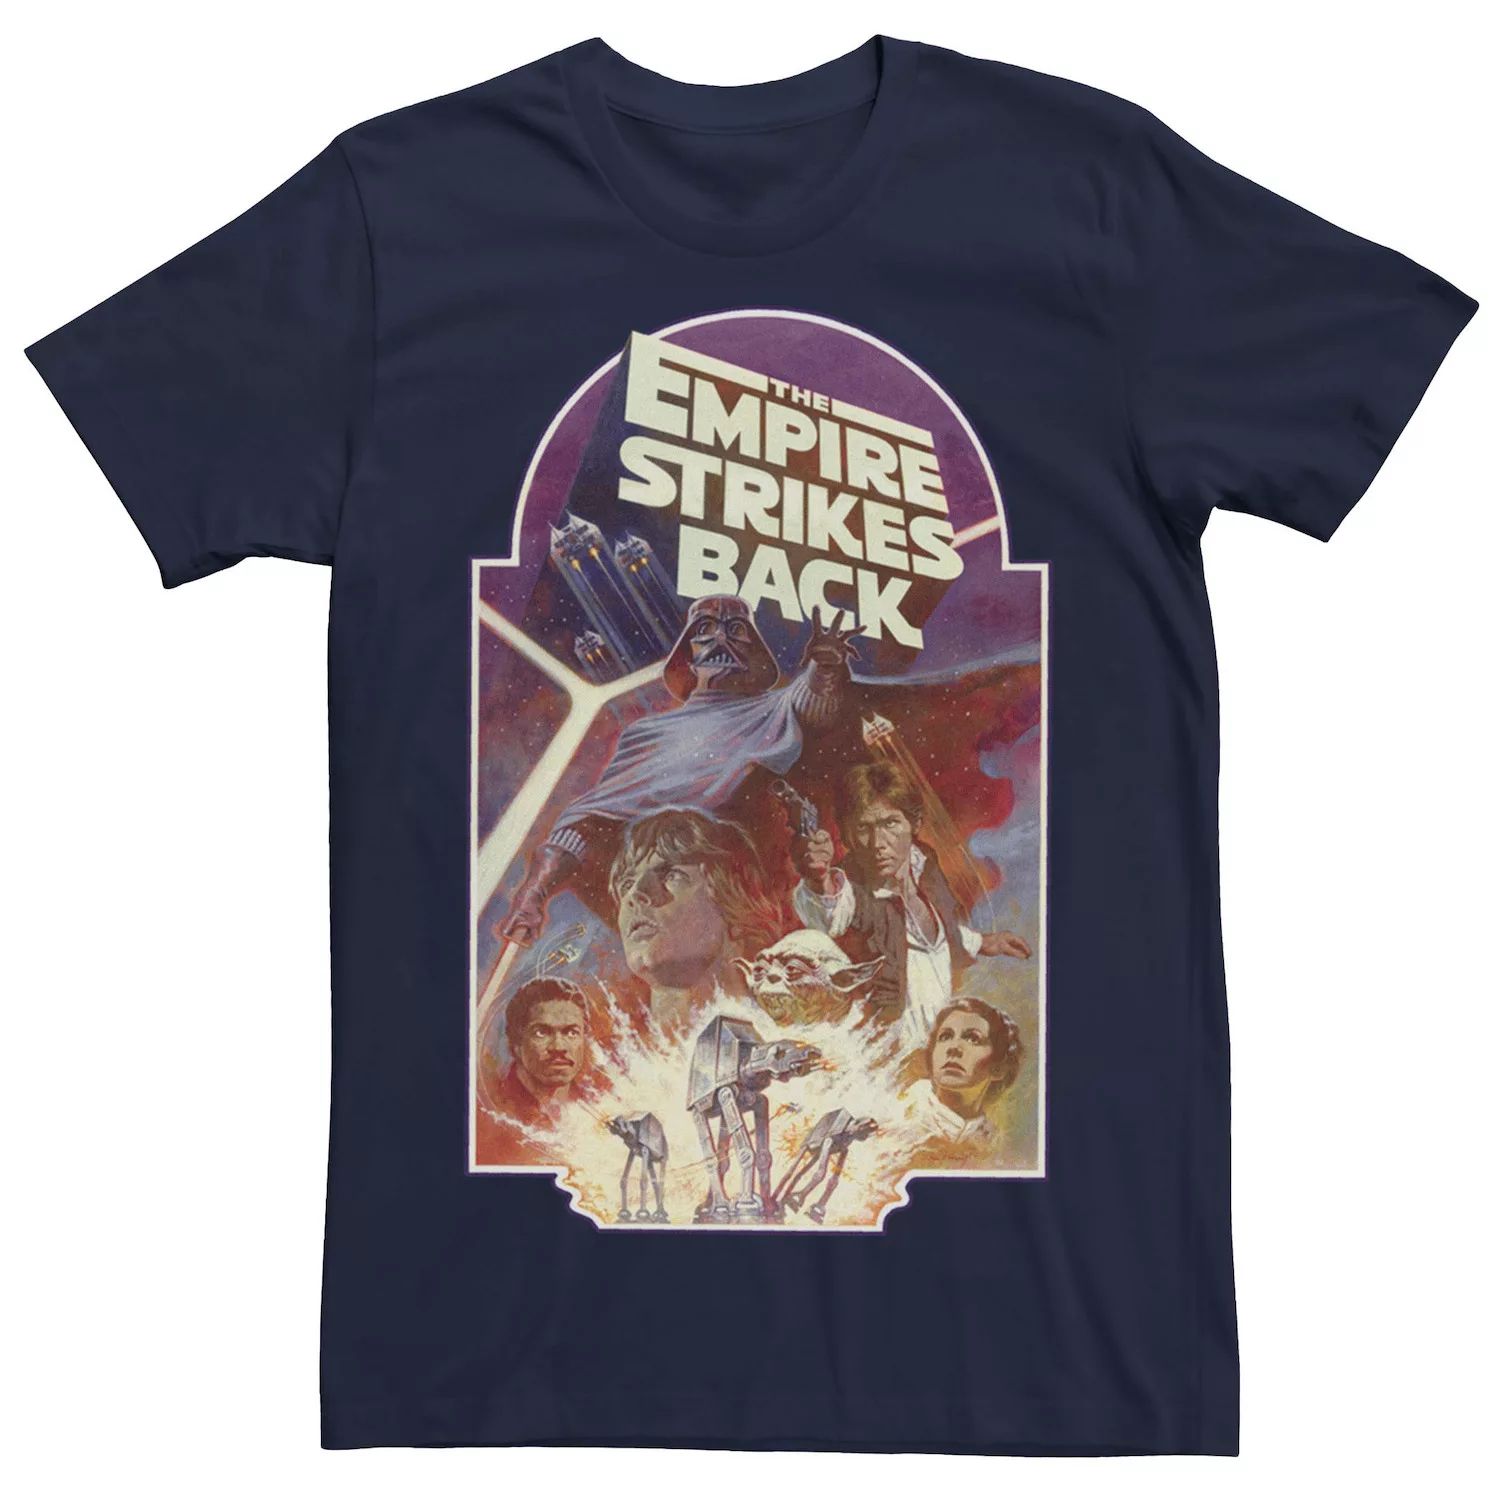 Мужская футболка с плакатом и коллажем Empire Strikes Back Star Wars